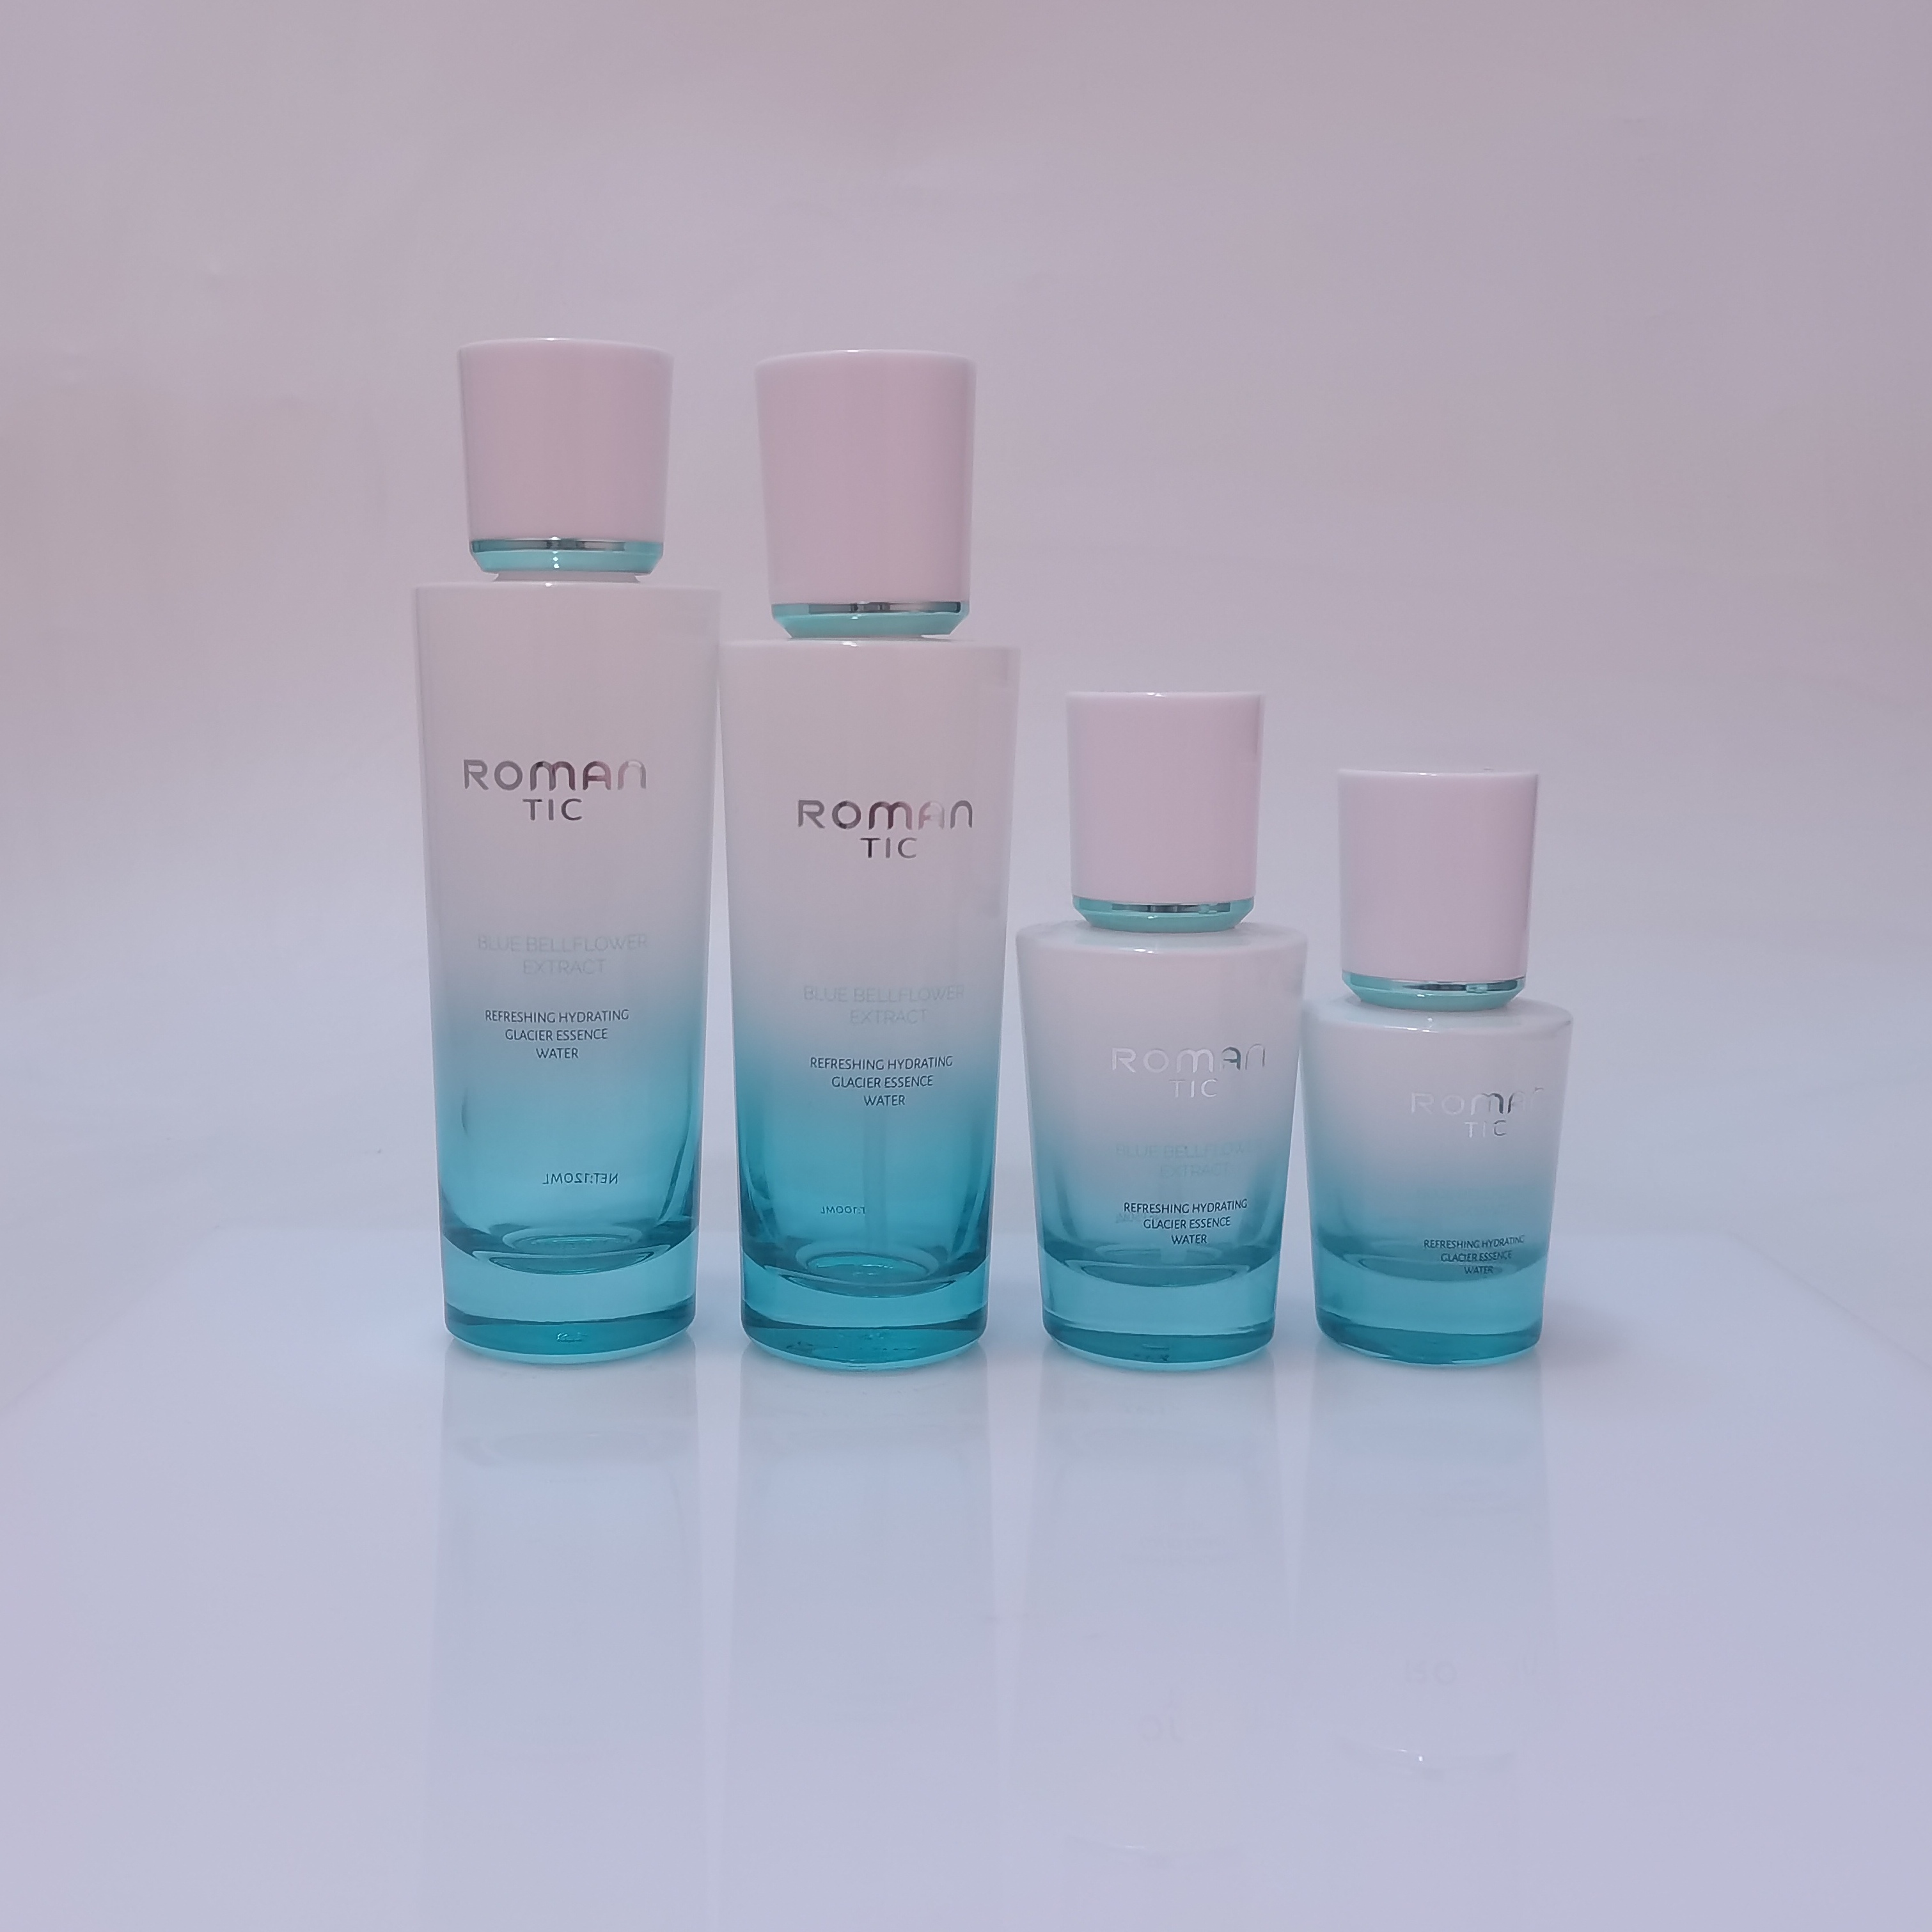 Irregularly Cosmetic Glass Set Bottle and Jar